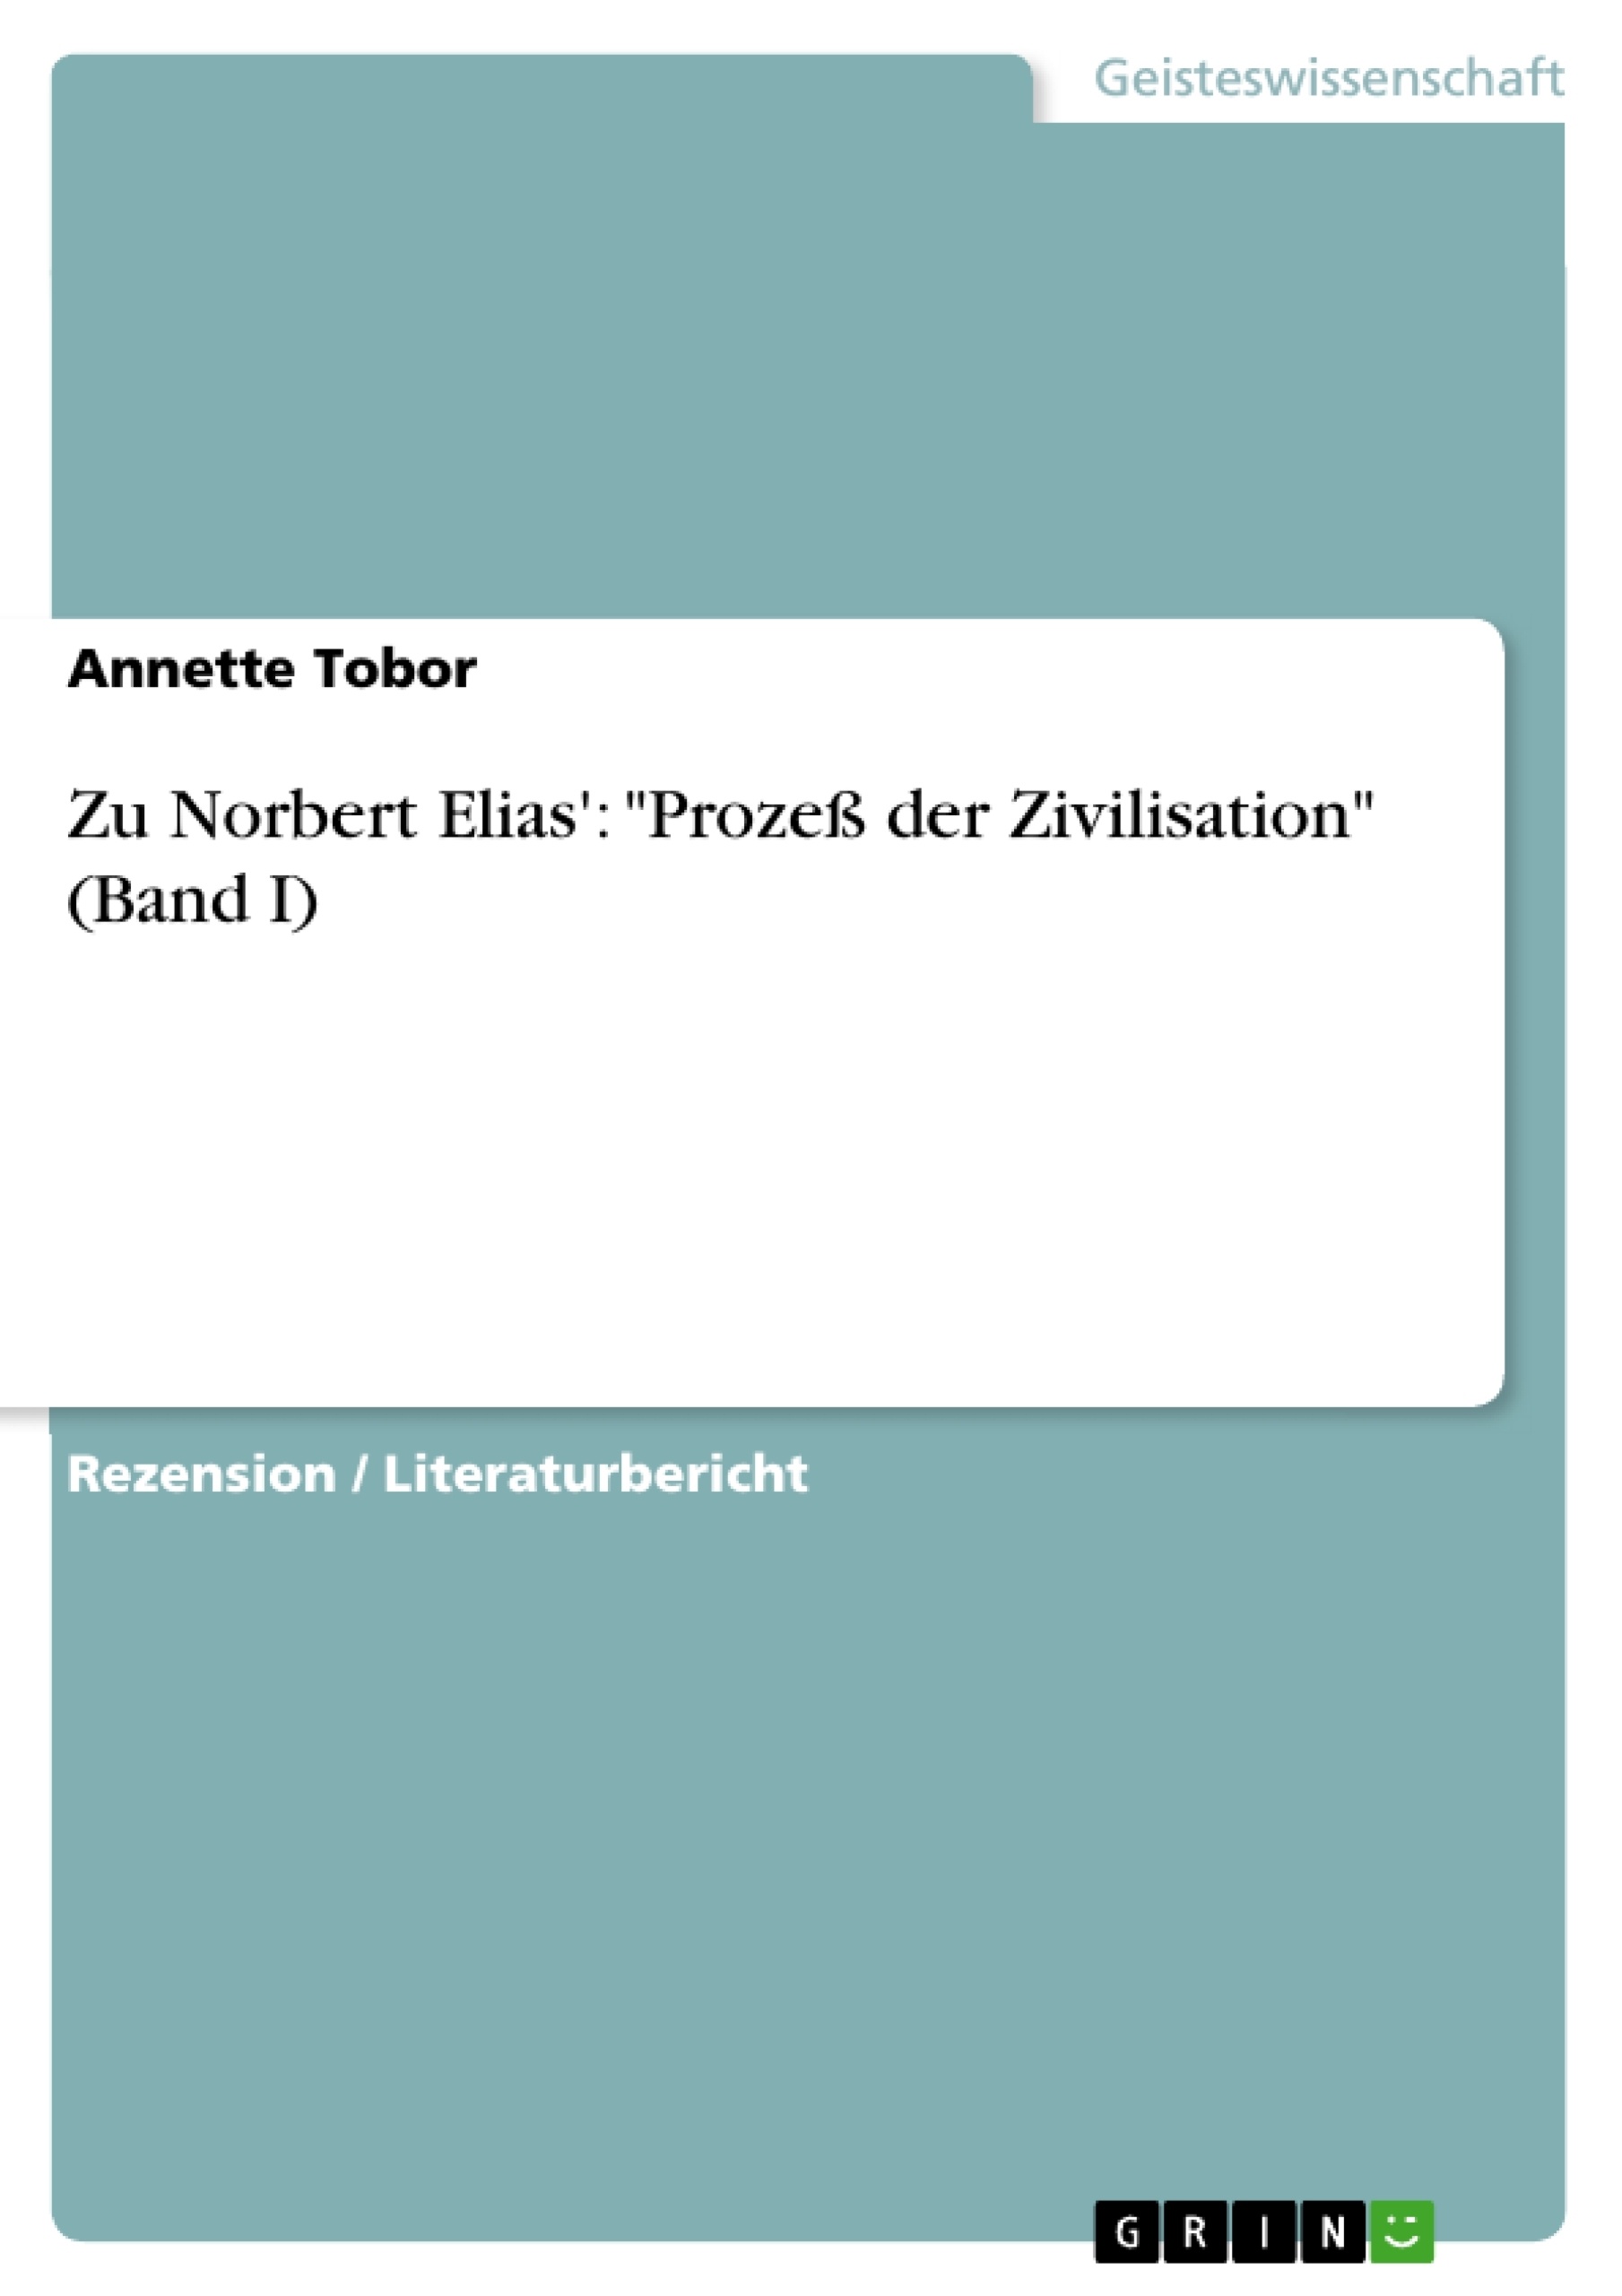 Titre: Zu Norbert Elias': "Prozeß der Zivilisation" (Band I)